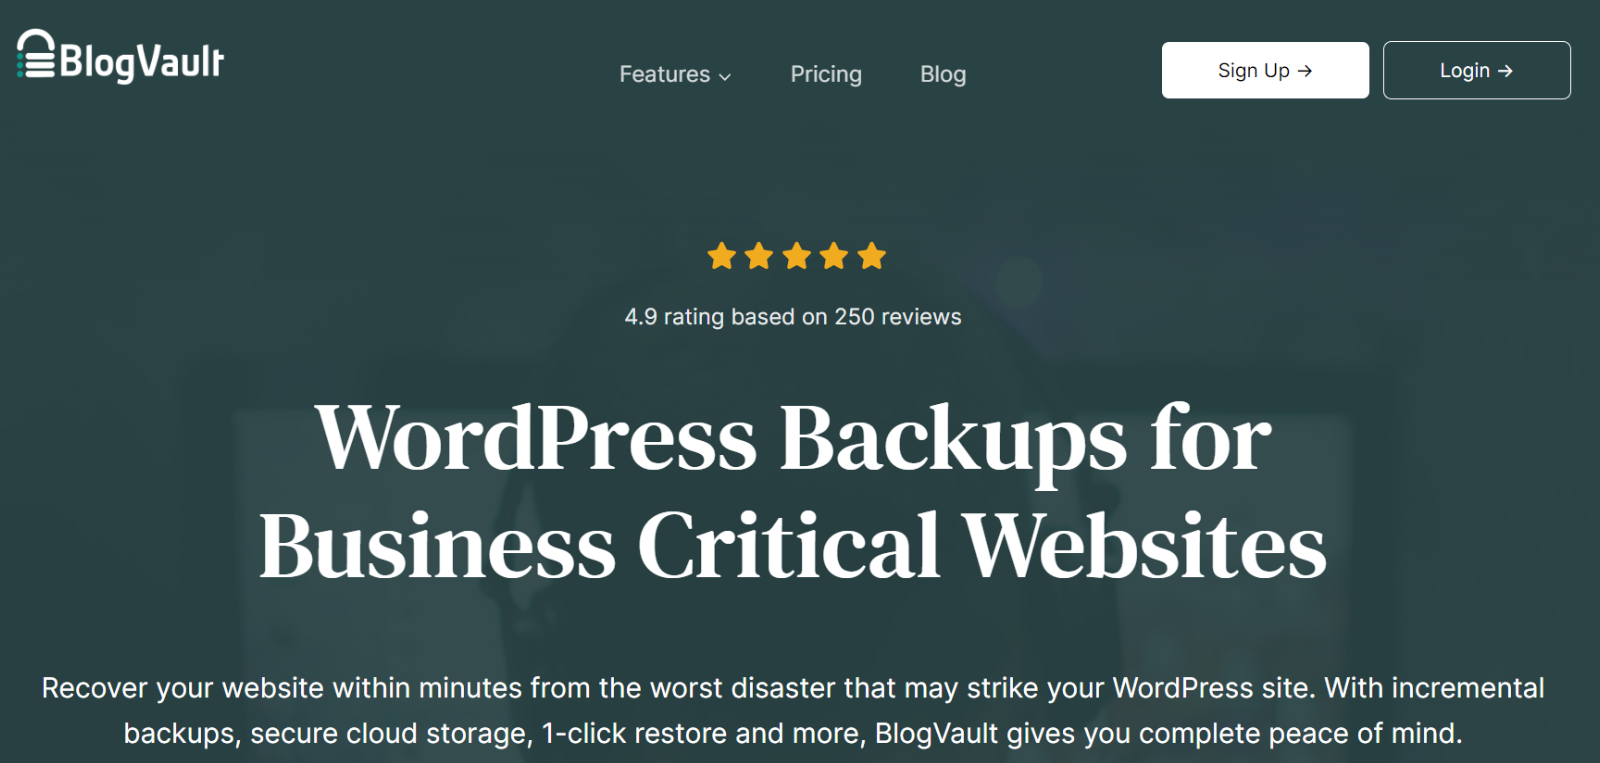 Blogvault Wordpress Mnagement Tool